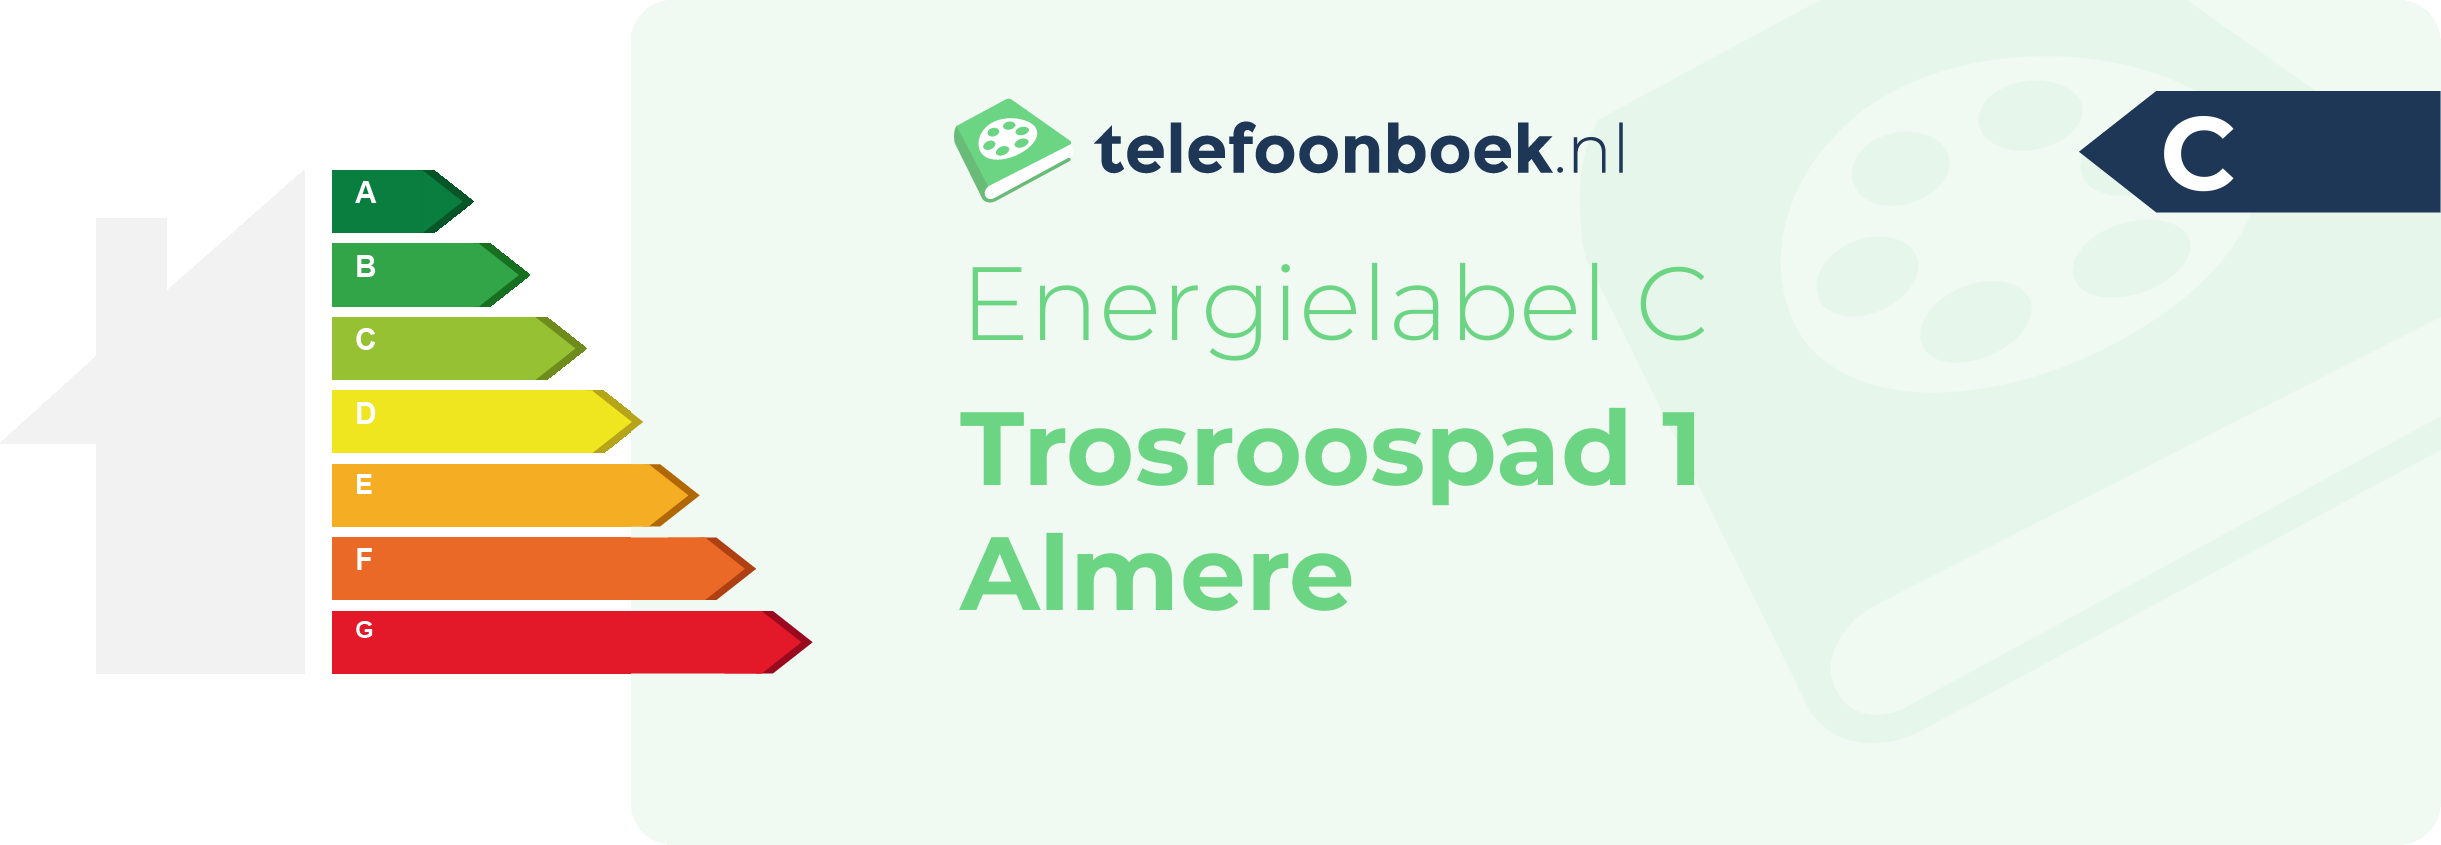 Energielabel Trosroospad 1 Almere